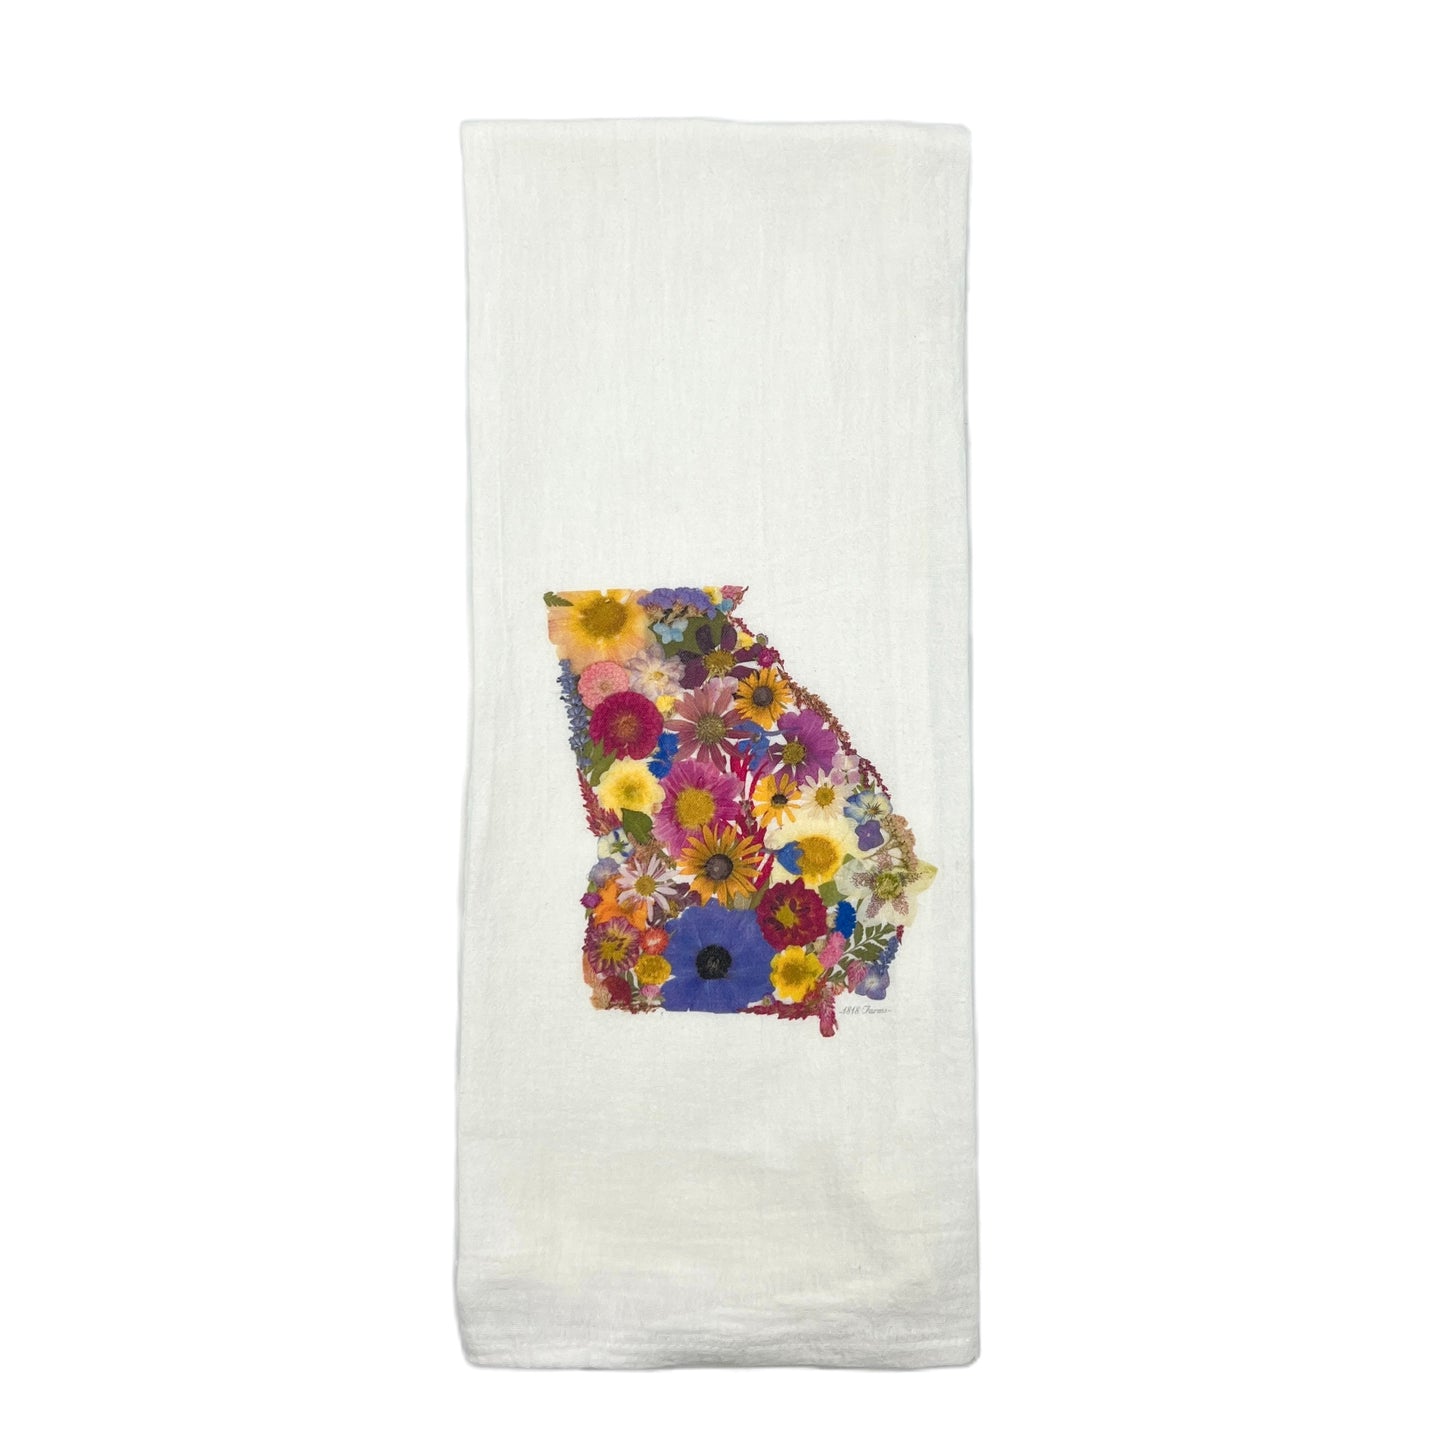 State Themed Flour Sack Towel  - "Where I Bloom" Collection Towel 1818 Farms Georgia  